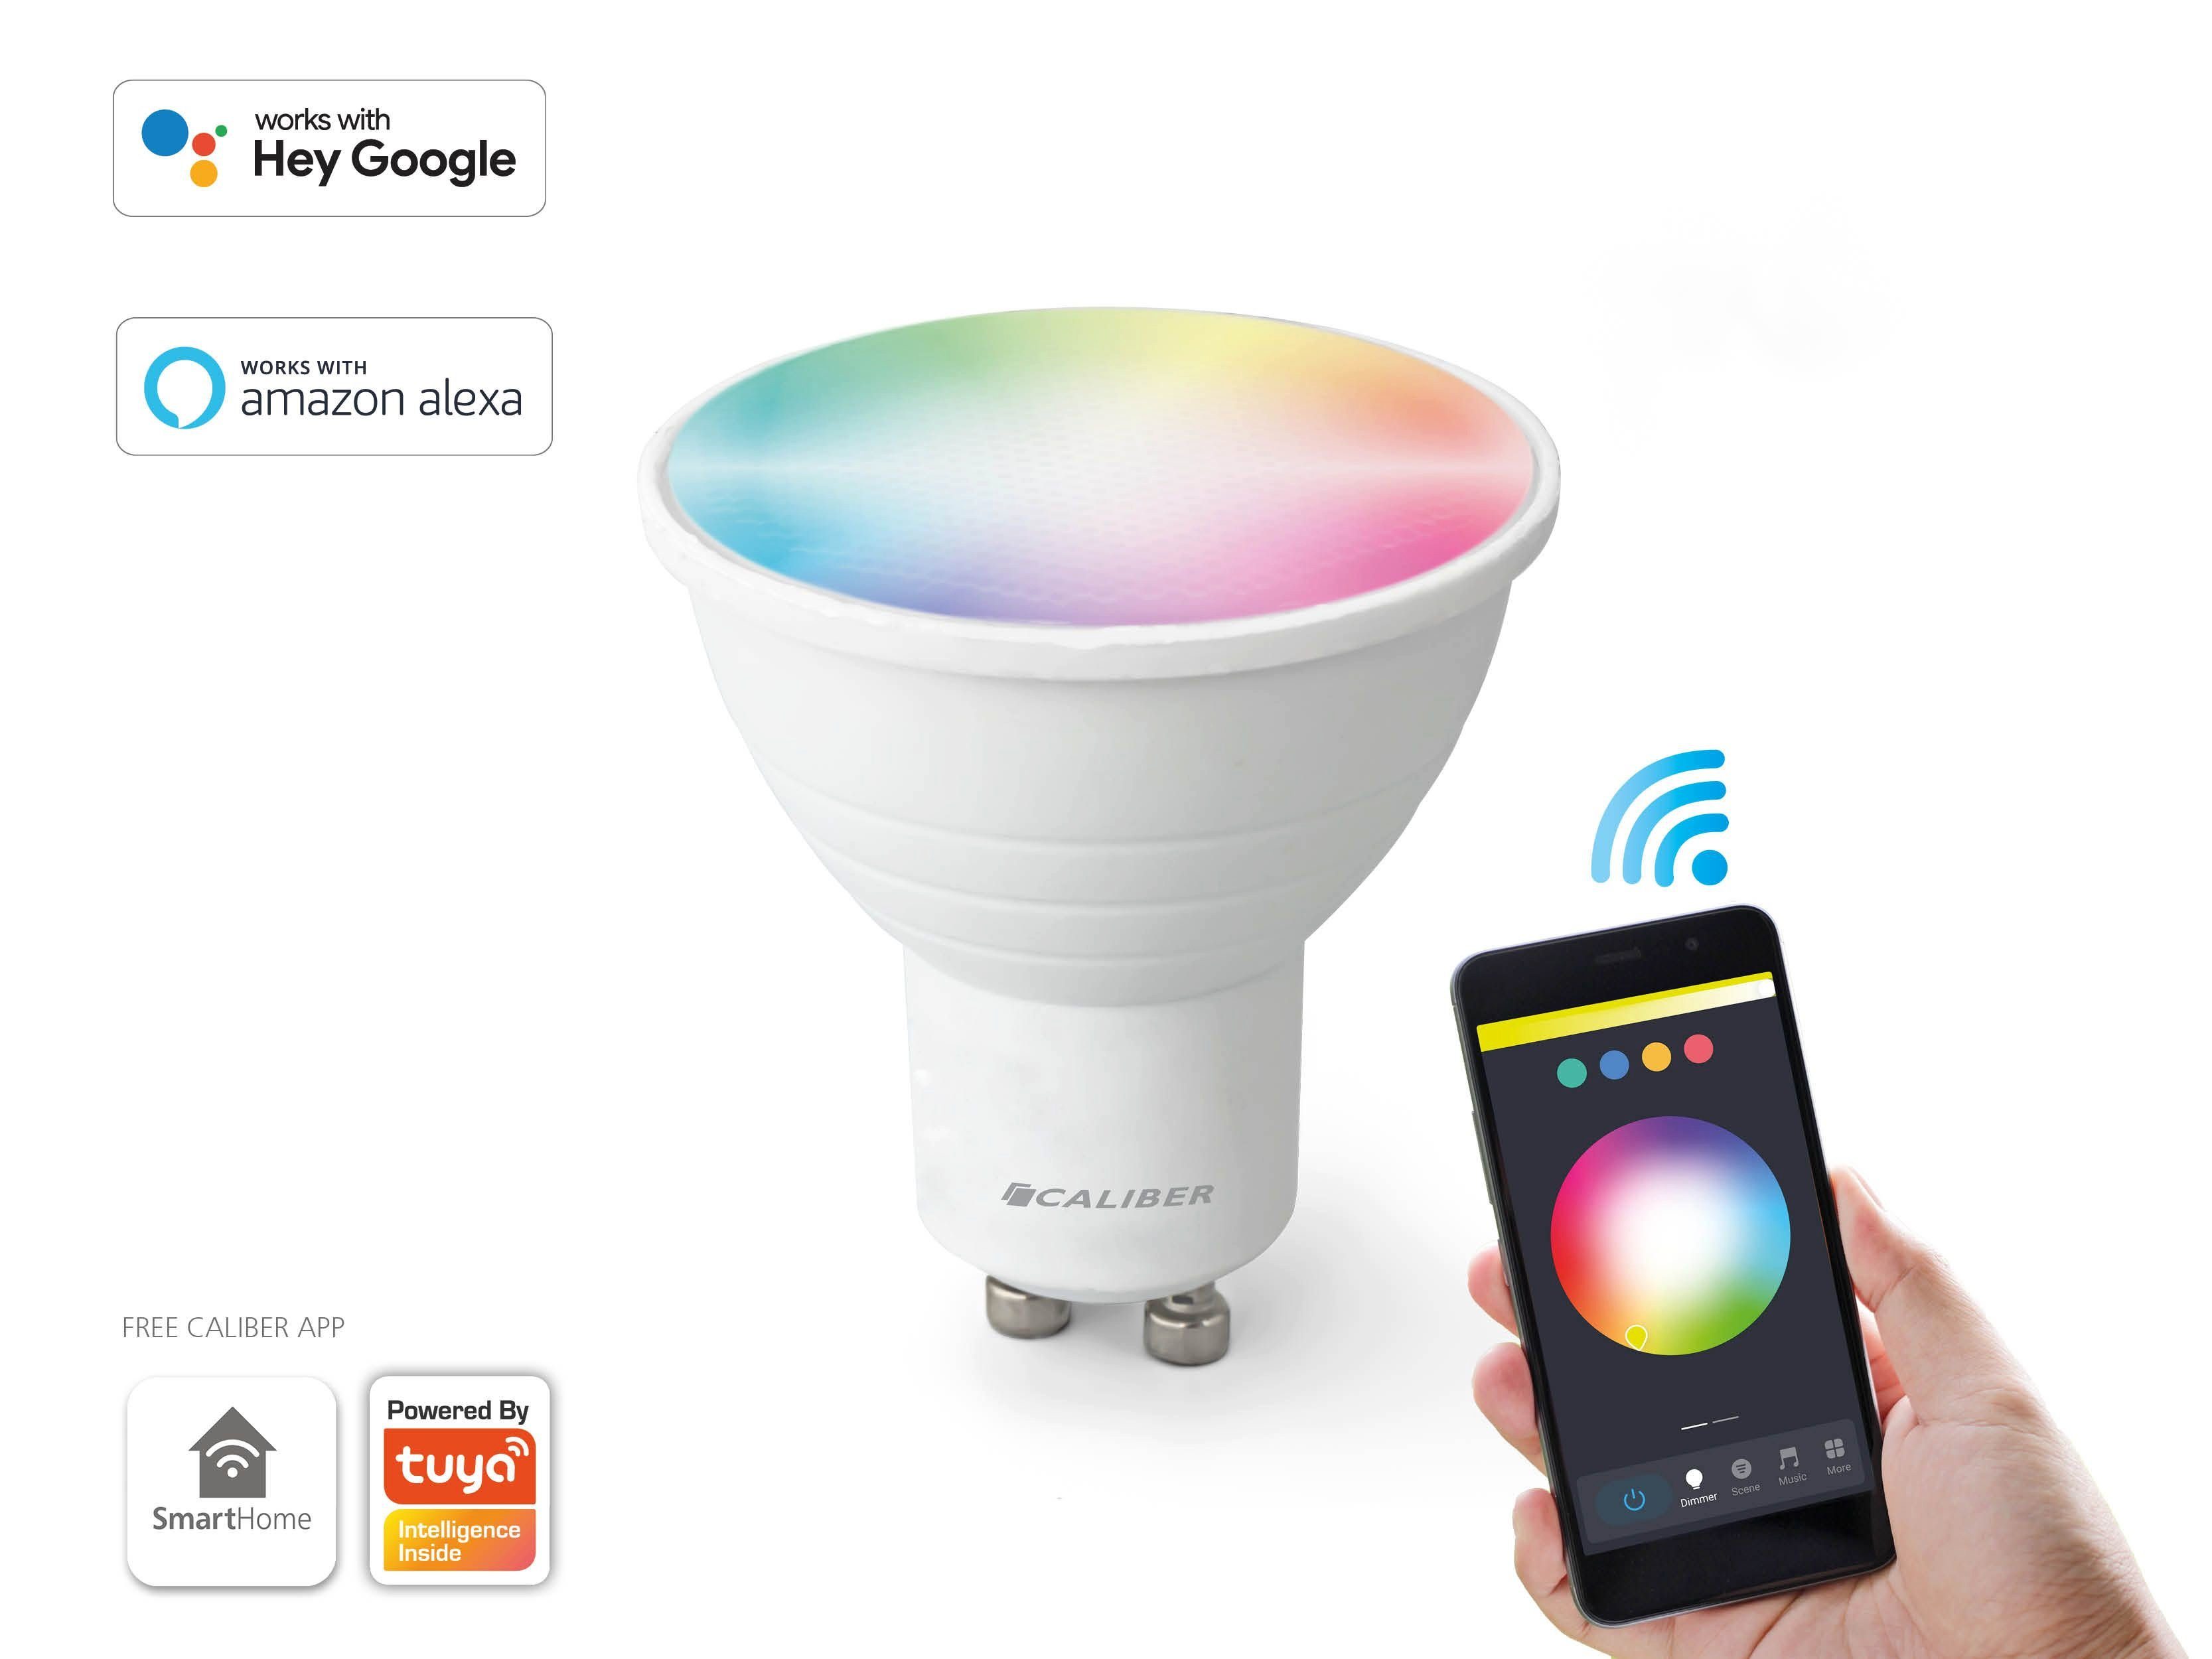 Caliber »Smarte WLAN GU10 Lampe, mehrfarbrige dimmbare smarte LED Lampe, um  Abläufe und Zeitpläne über die Caliber Smart Home-App zu steuern«  Smart-Home-Station